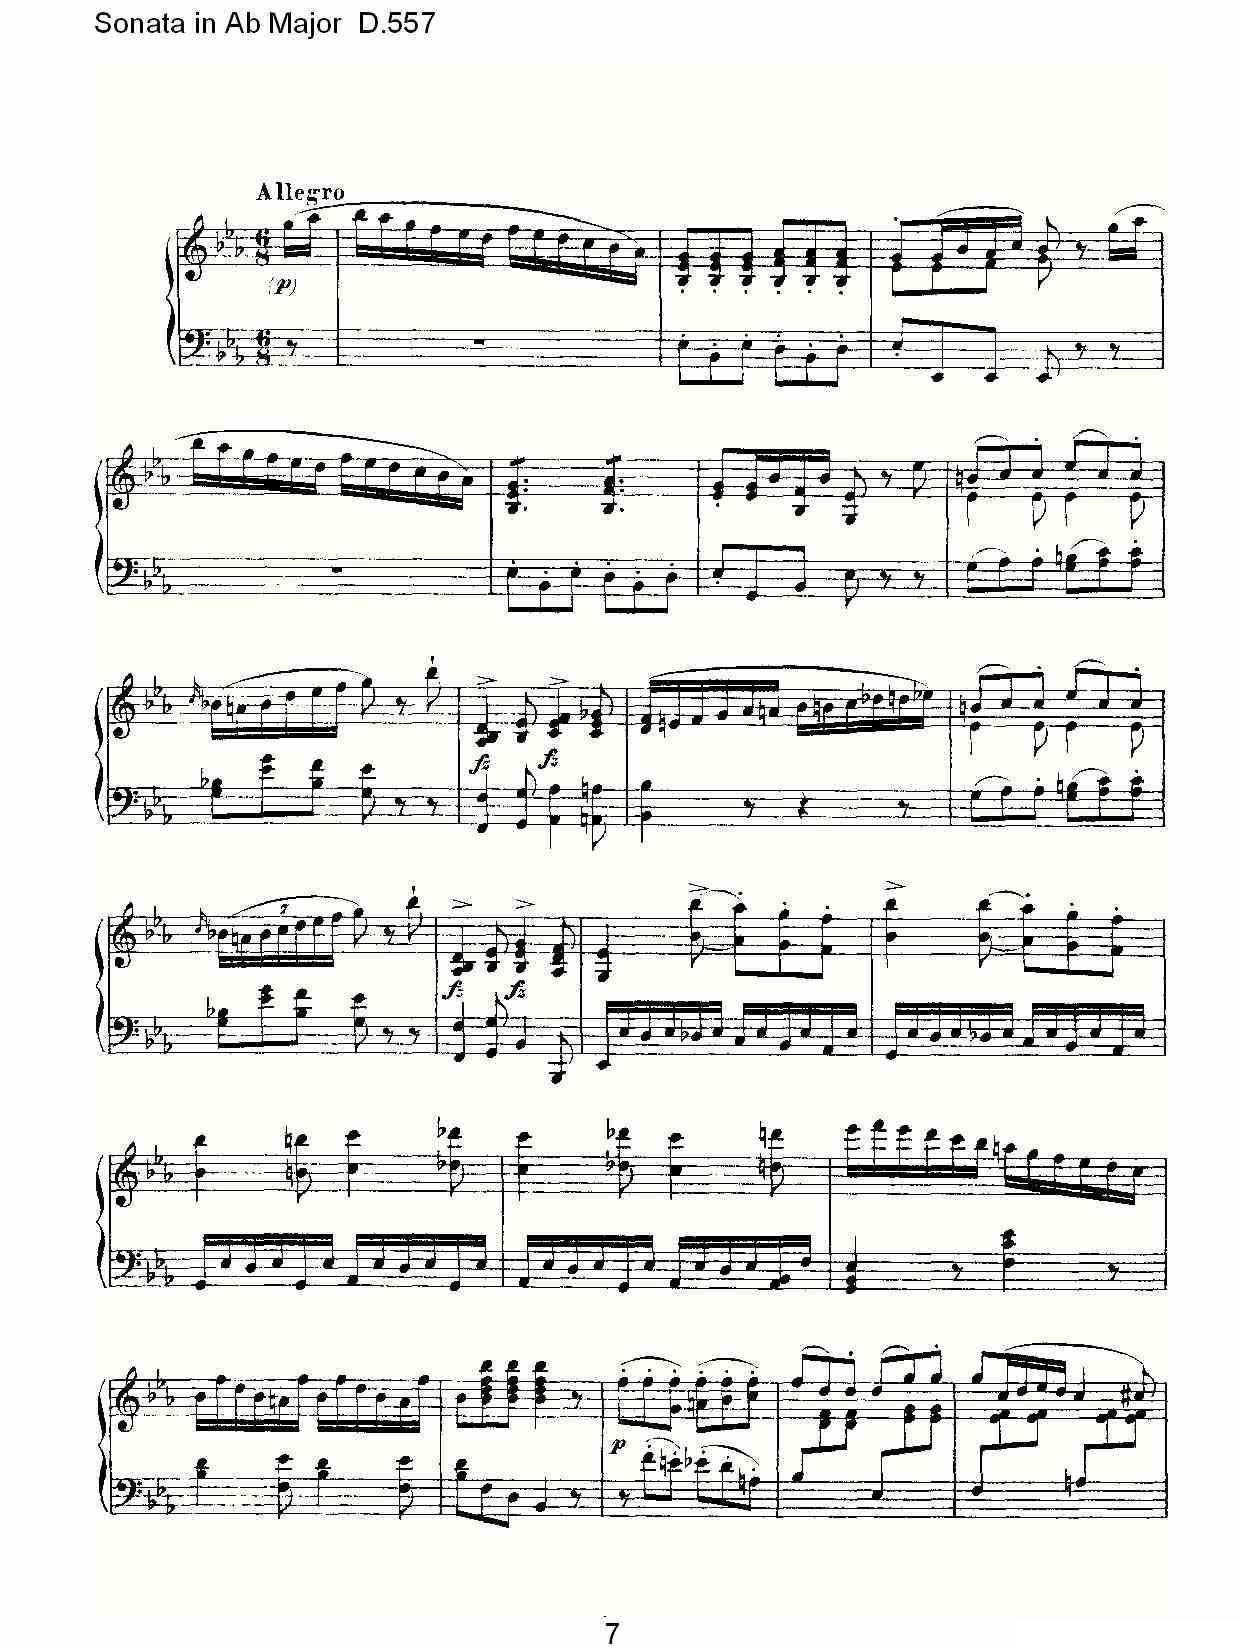 Sonata in Ab Major D.557（Ab大调奏鸣曲 D.557）钢琴曲谱（图7）